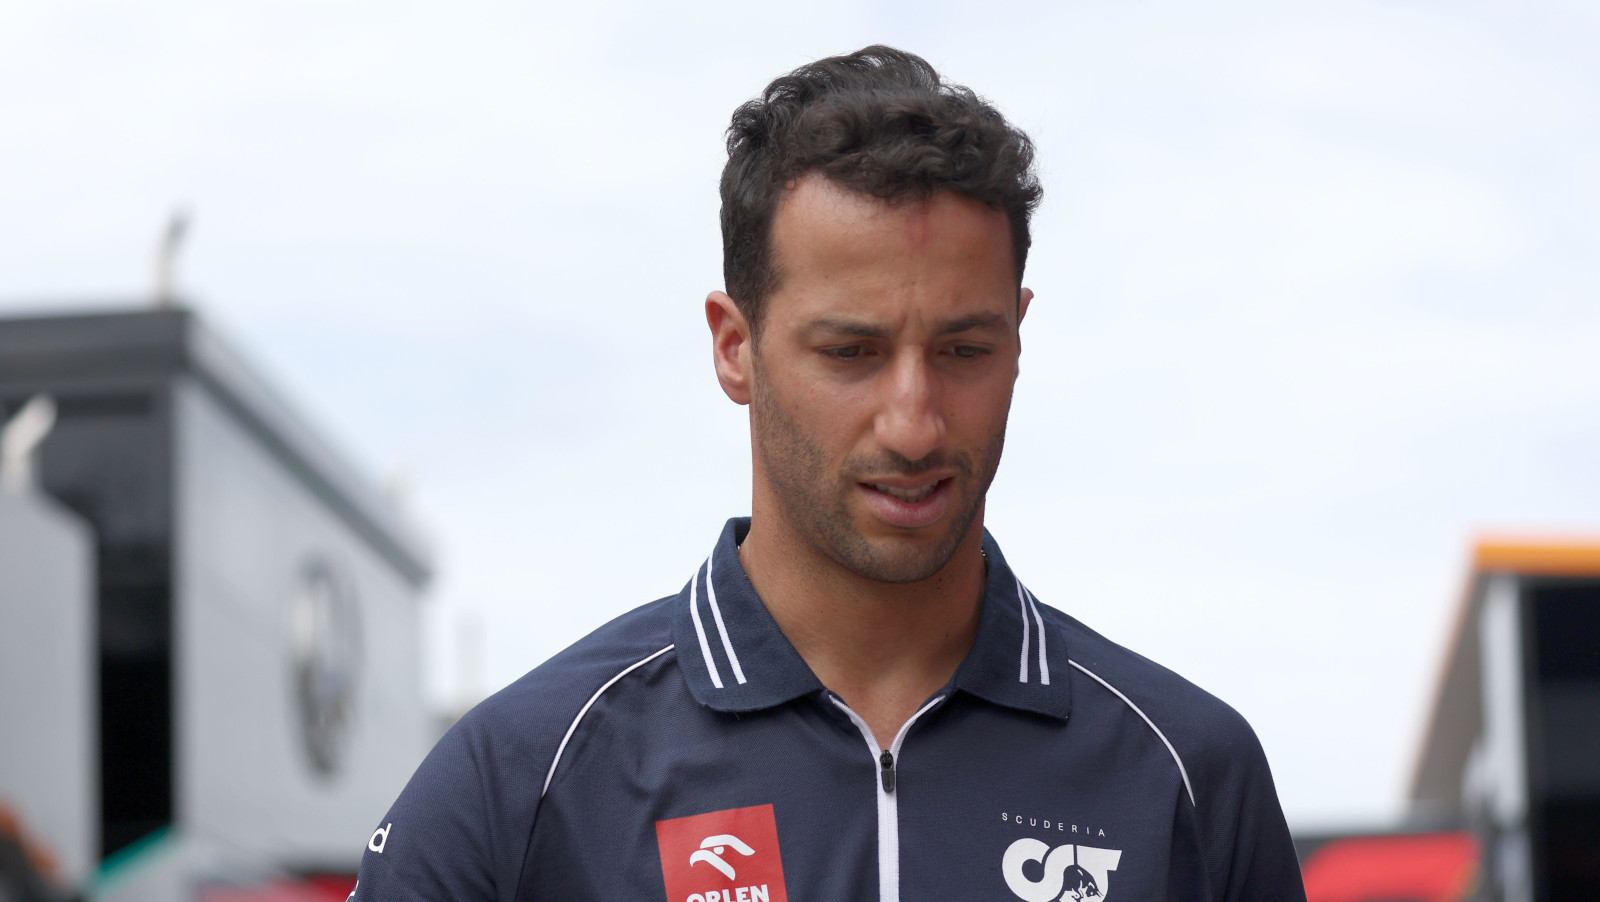 Daniel Ricciardo blasted for leaving Red Bull: ‘I’ll never forgive him ...